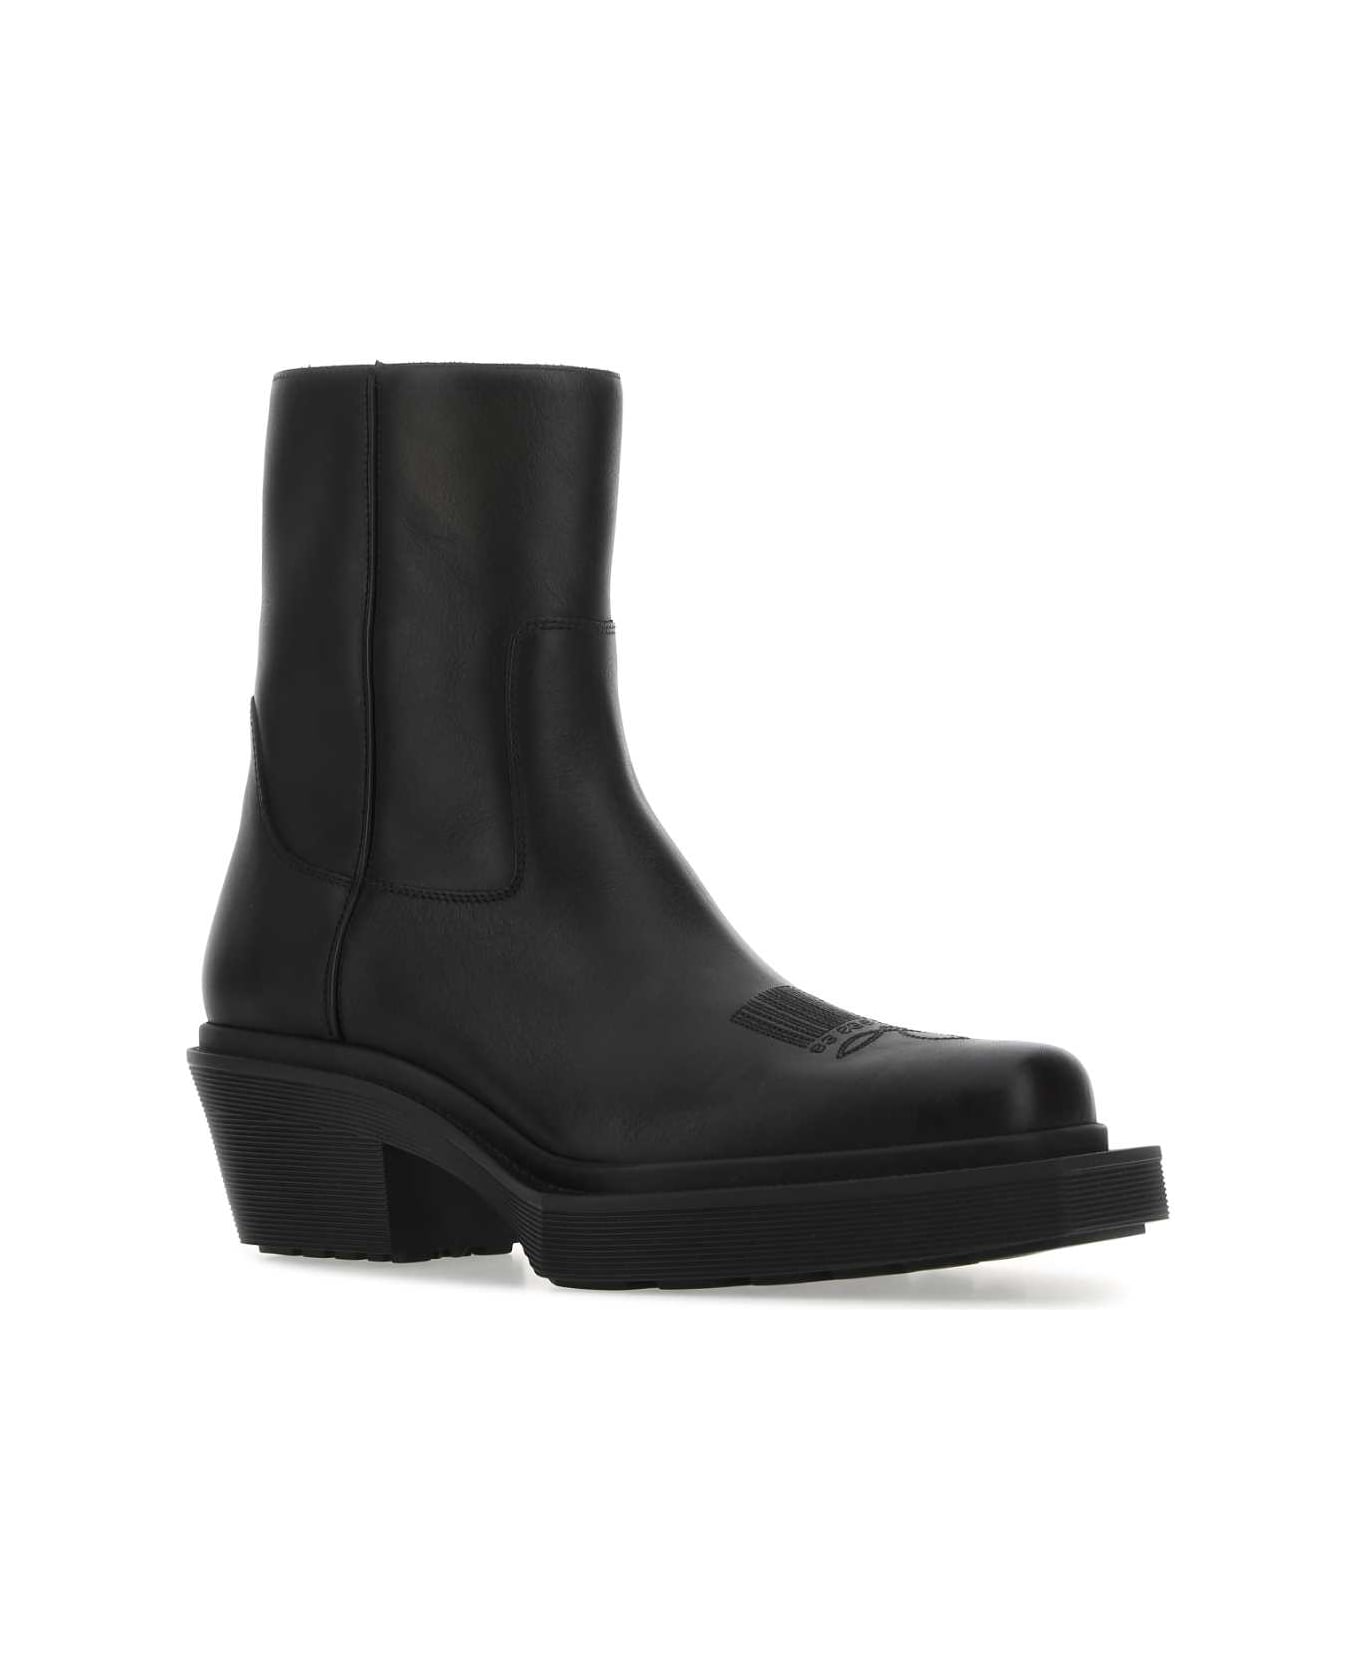 VTMNTS Black Leather Ankle Boots - MATTEBLACK